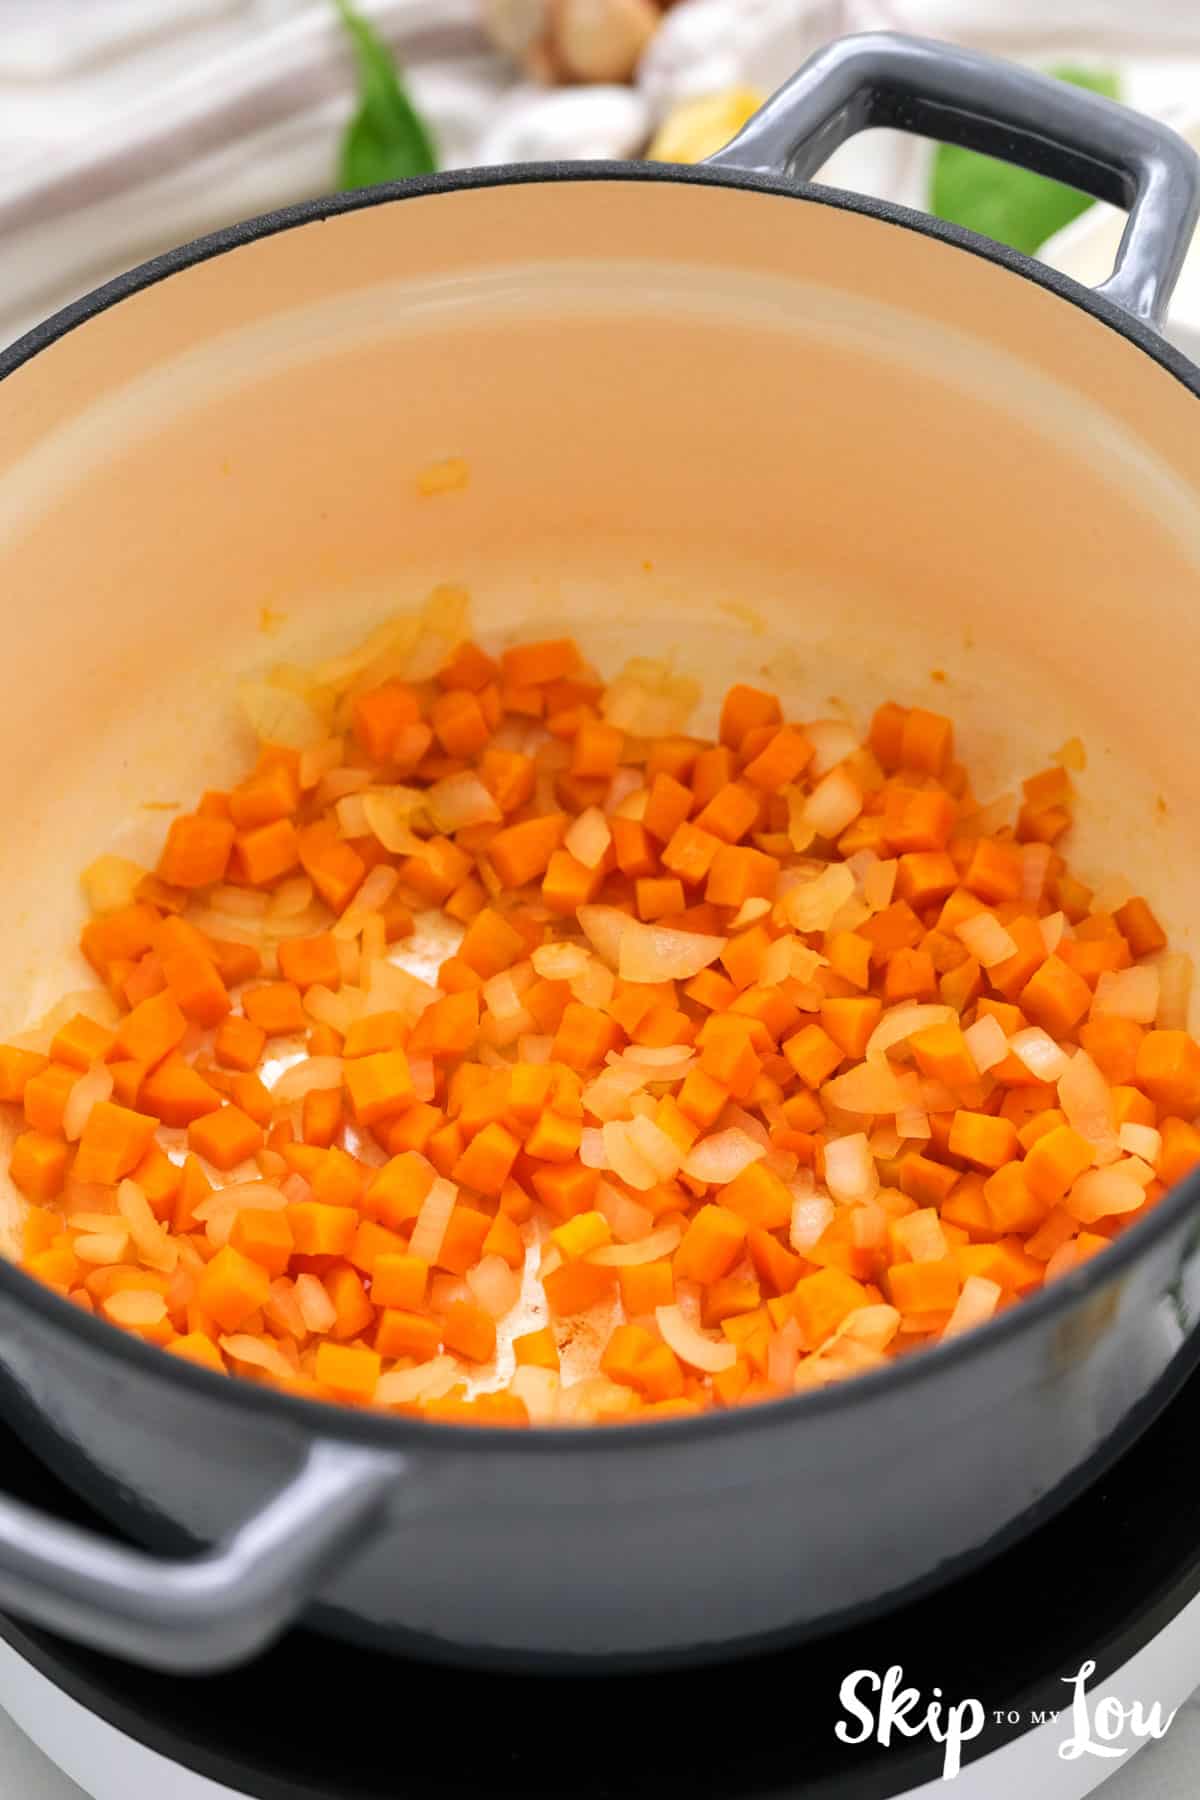 saute onions and carrots to make soup